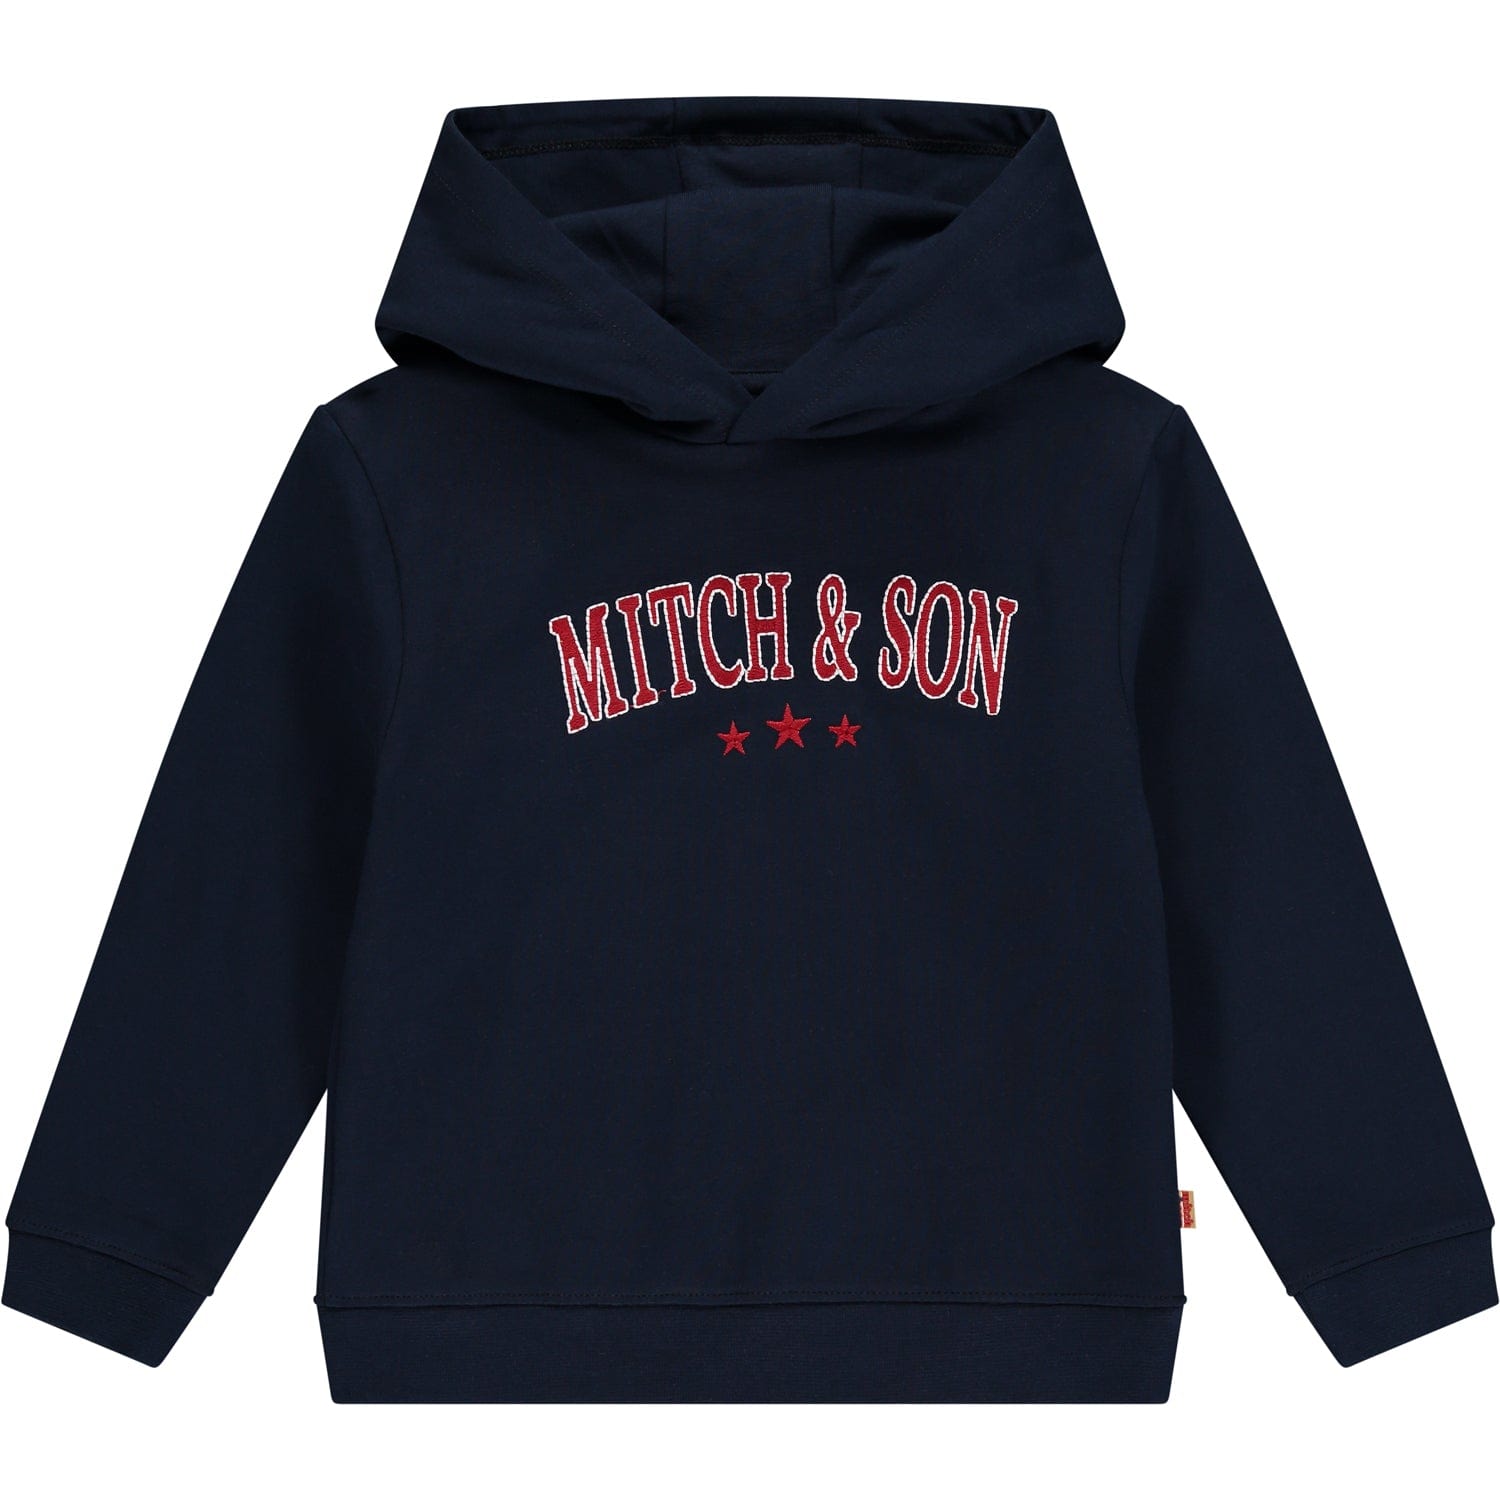 MITCH & SON - Flynn Hoody Logo Tracksuit - Blue Navy